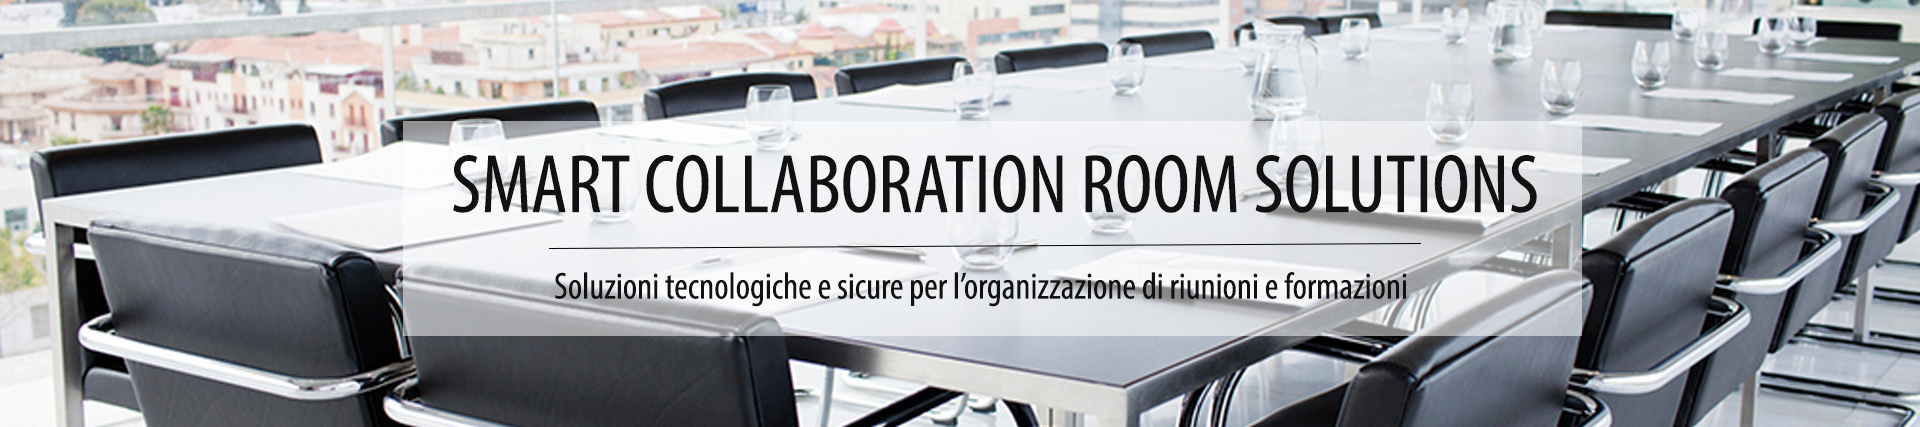 Smart-Collaboration-Room